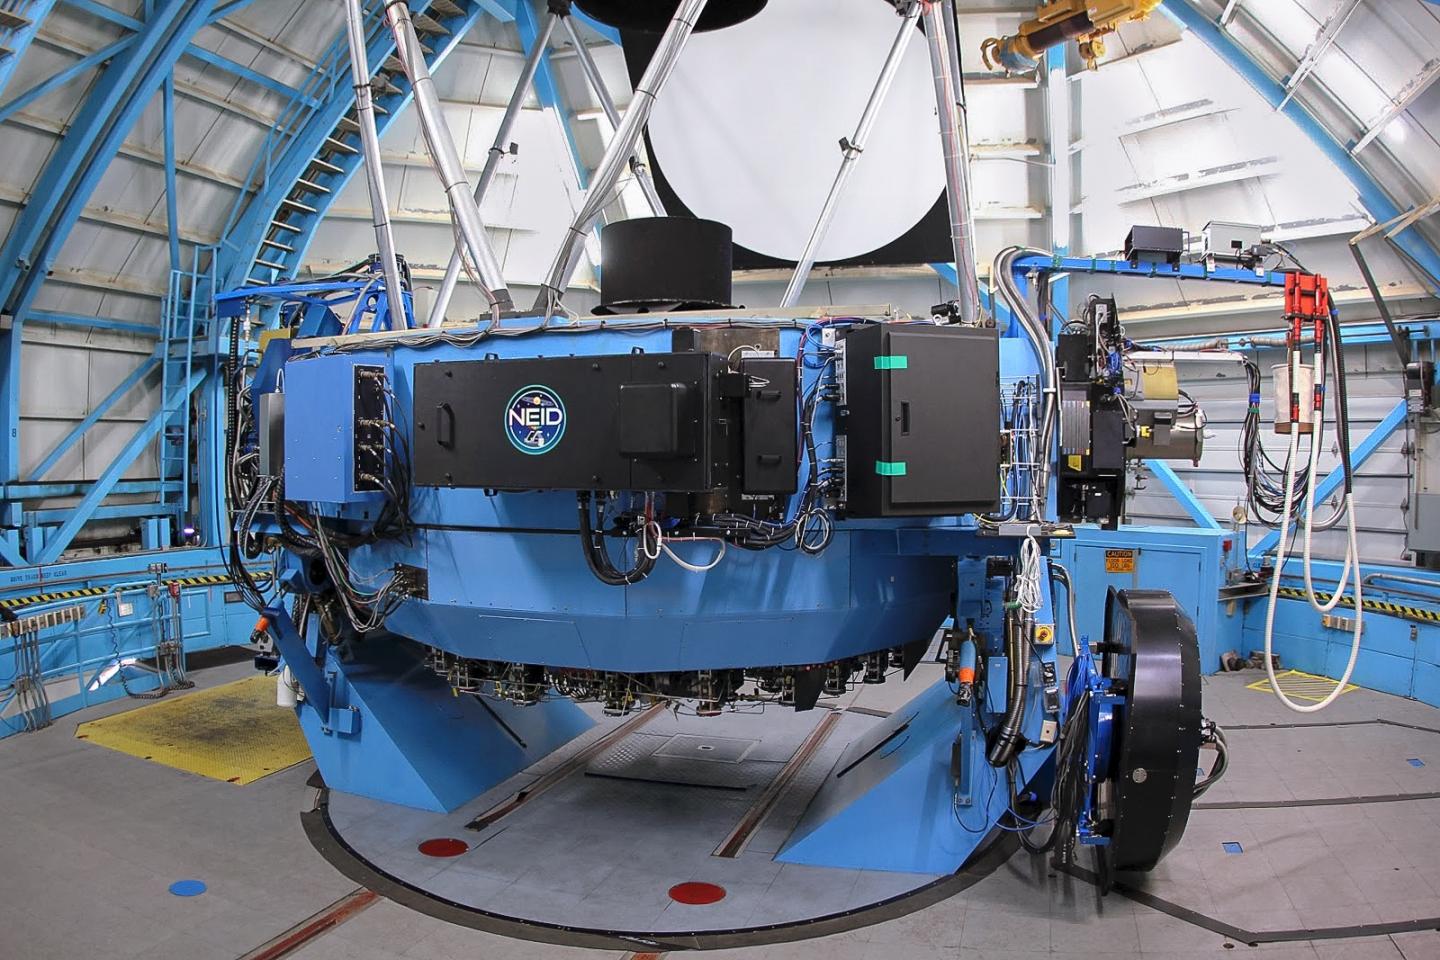 NEID Fiber Feed (Port Adaptor) on the WIYN Telescope